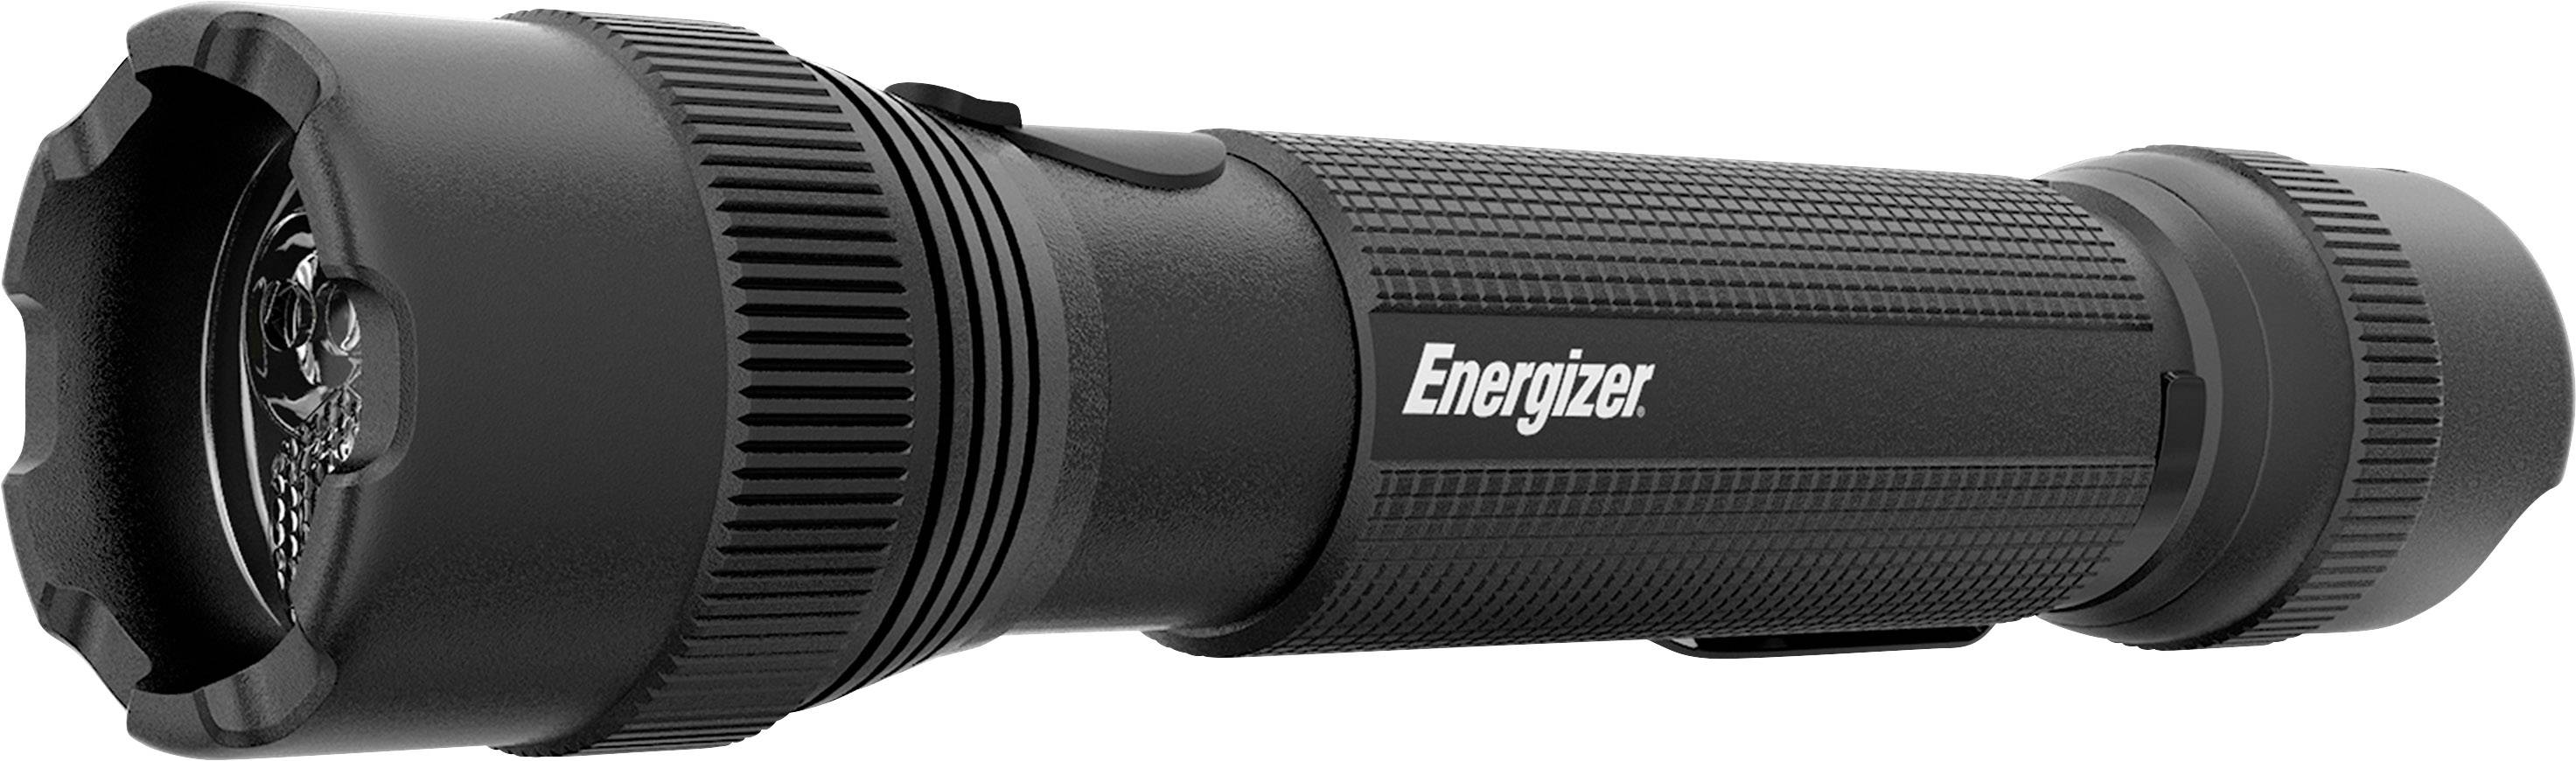 ENERGIZER Tactical 700 LED Taschenlampe akkubetrieben 700 lm 30 h 250 g